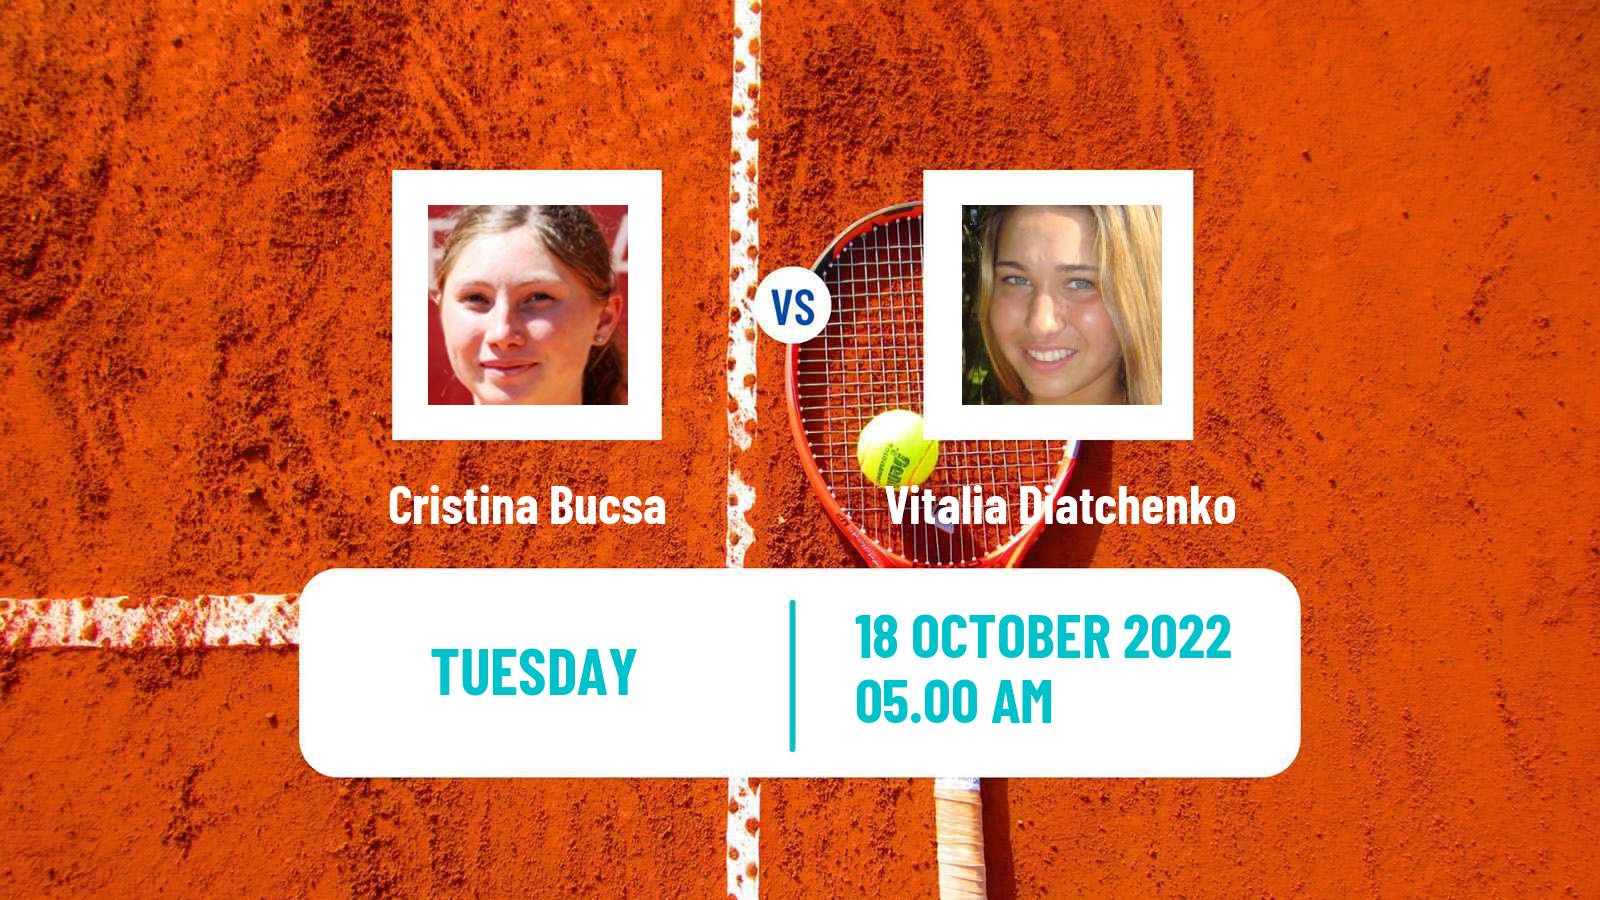 Tennis ATP Challenger Cristina Bucsa - Vitalia Diatchenko